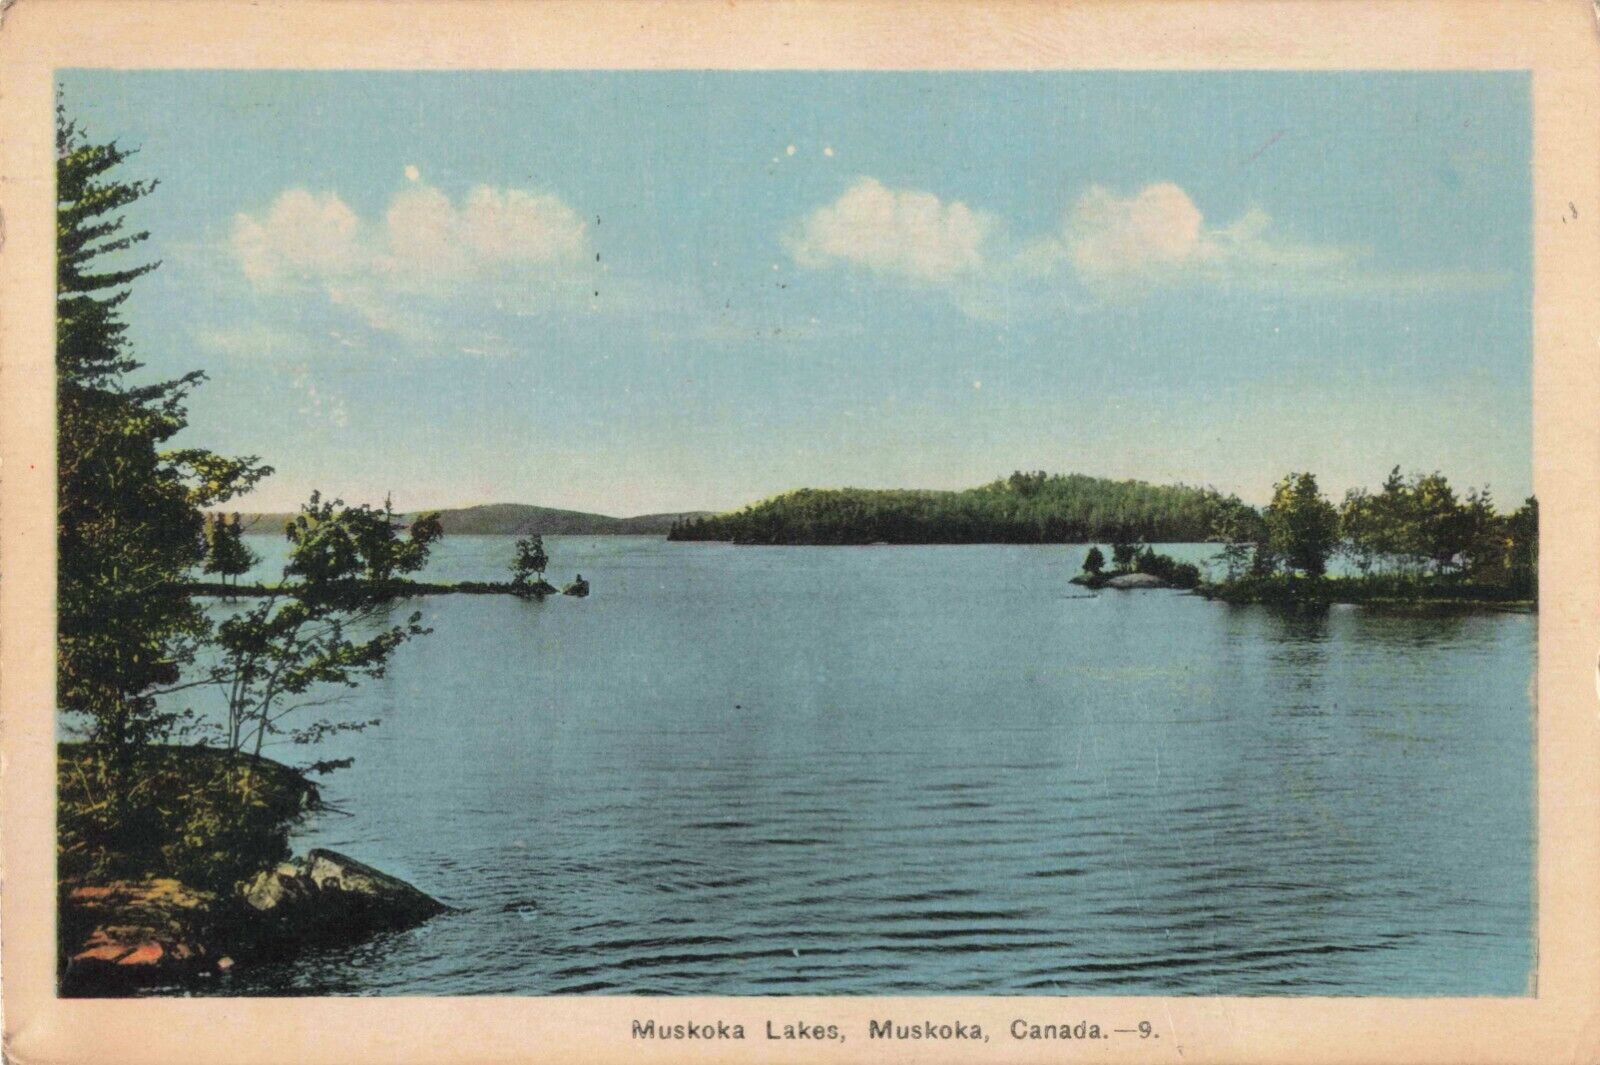 Muskoka Lakes Muskoka Ontario Canada 1939 Postcard